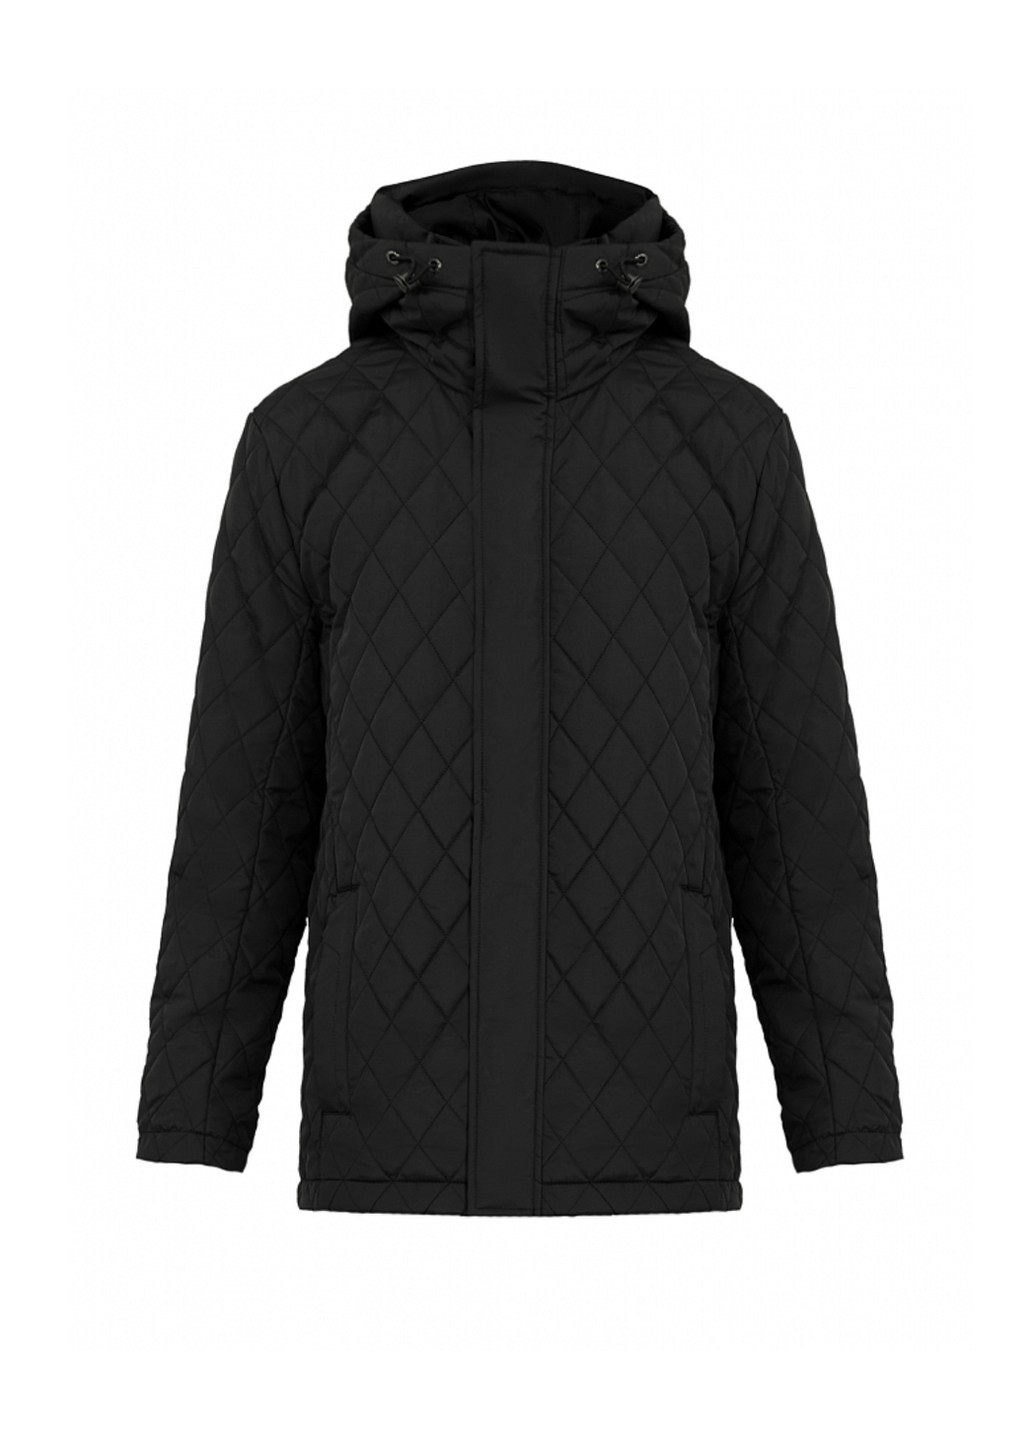 Черная демисезонная куртка a20-21000-200 Finn Flare